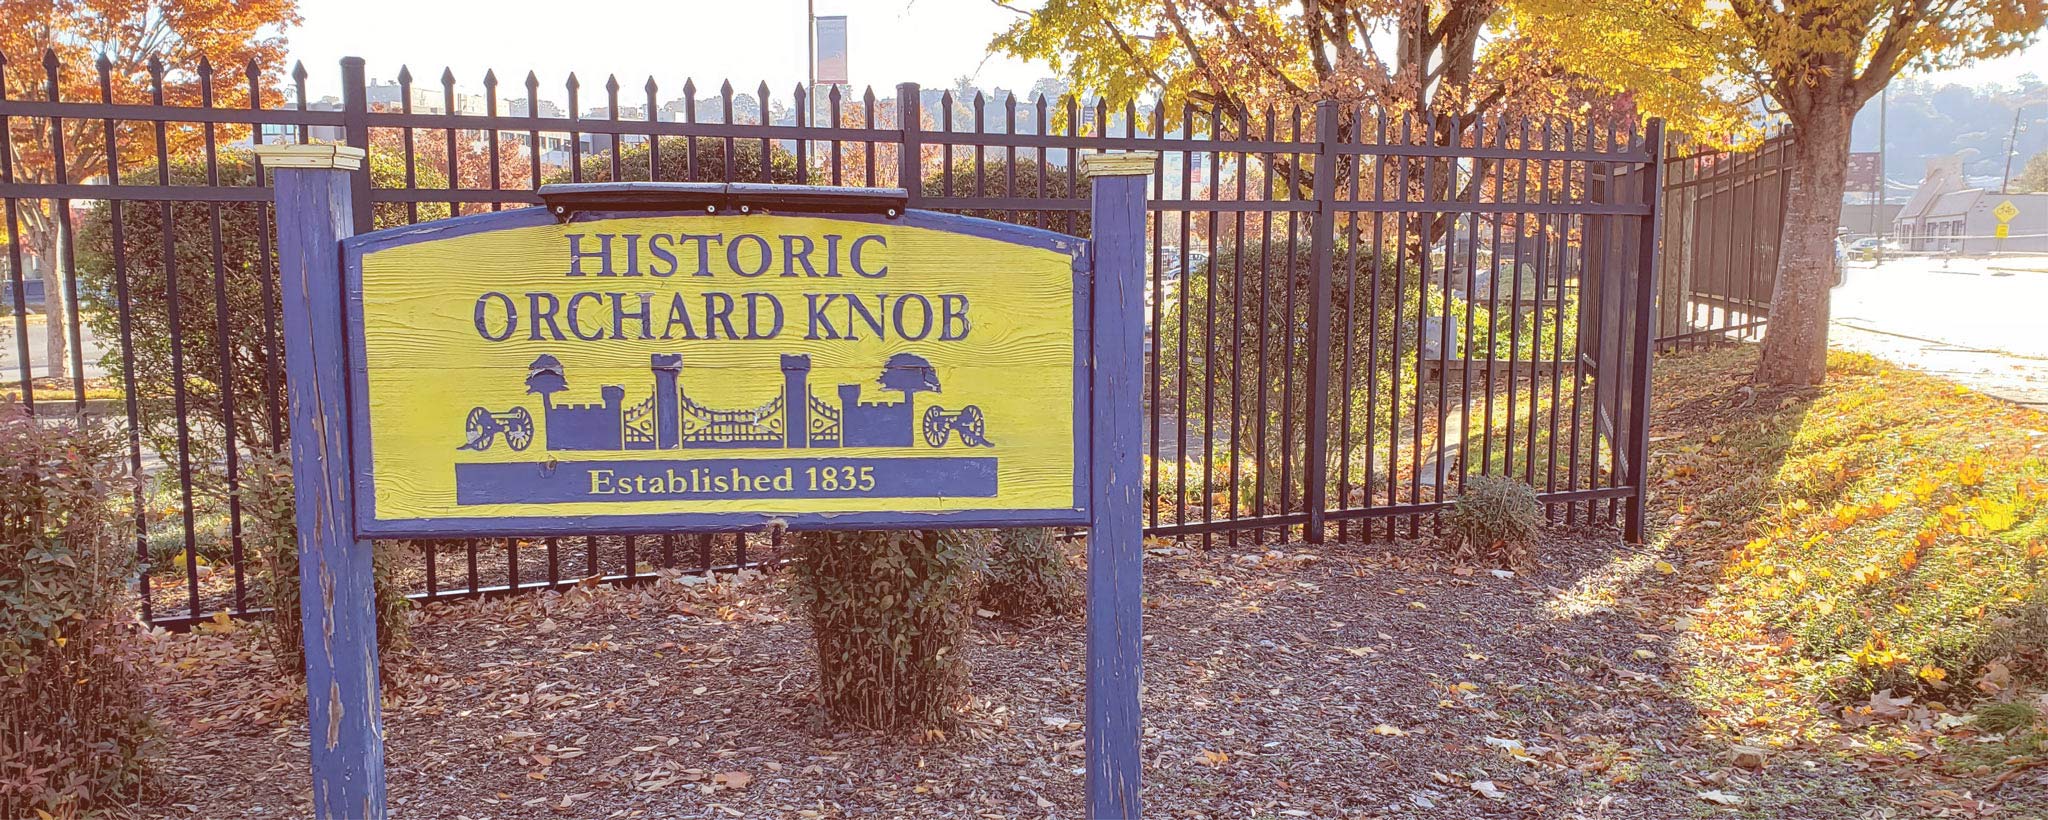 Historic Orchard Knob Signage